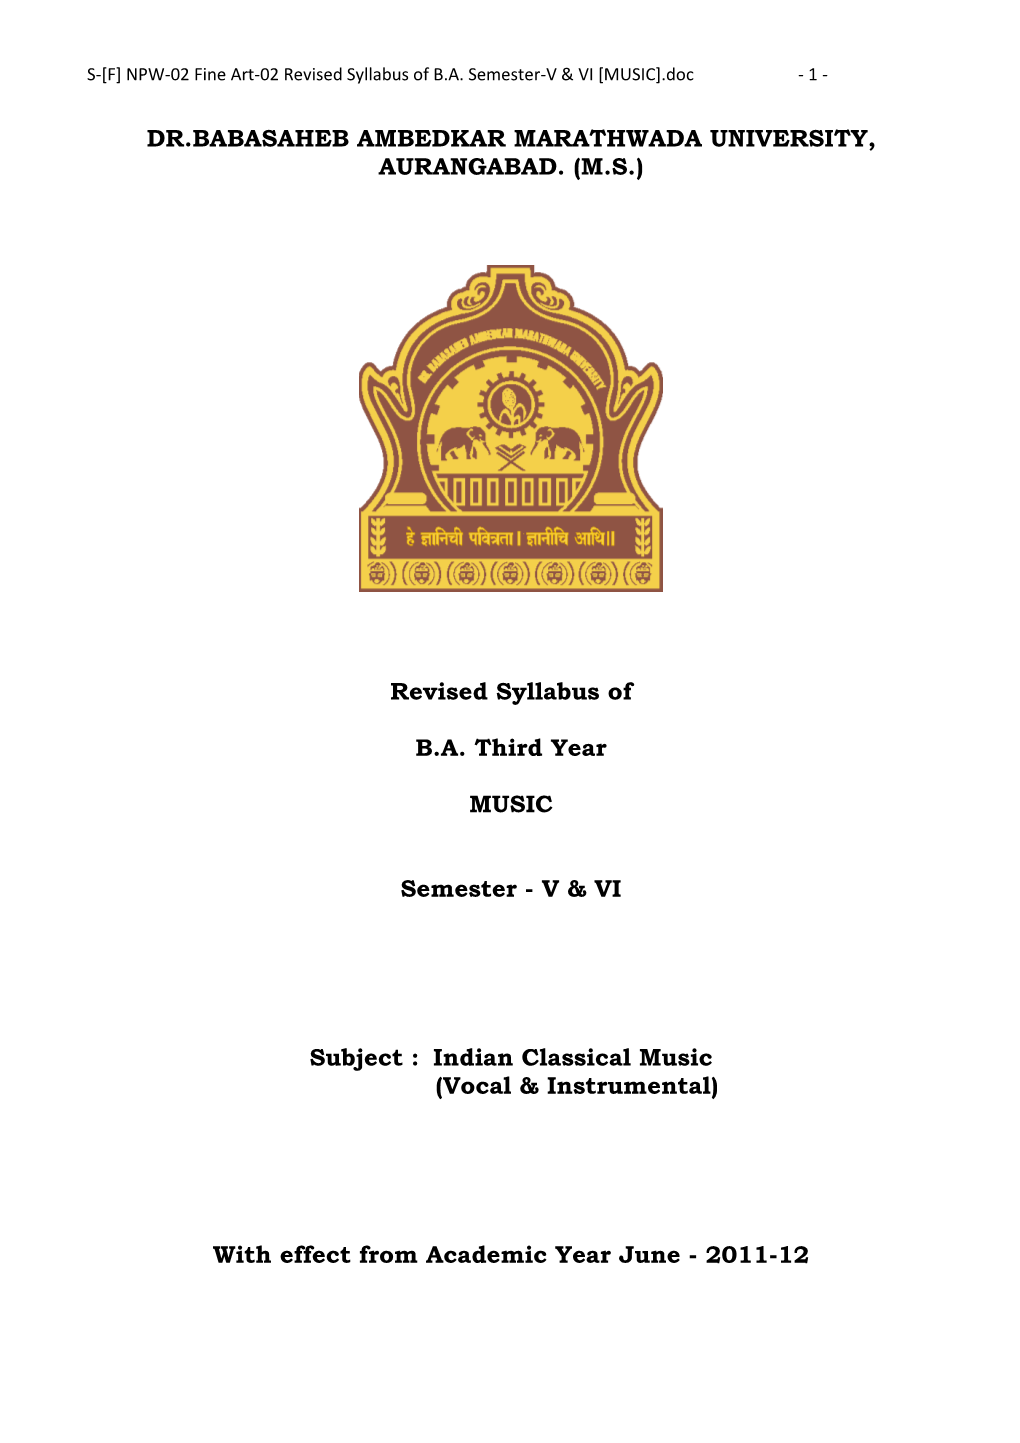 (MS) Revised Syllabus of BA Third Year MUSIC Semester